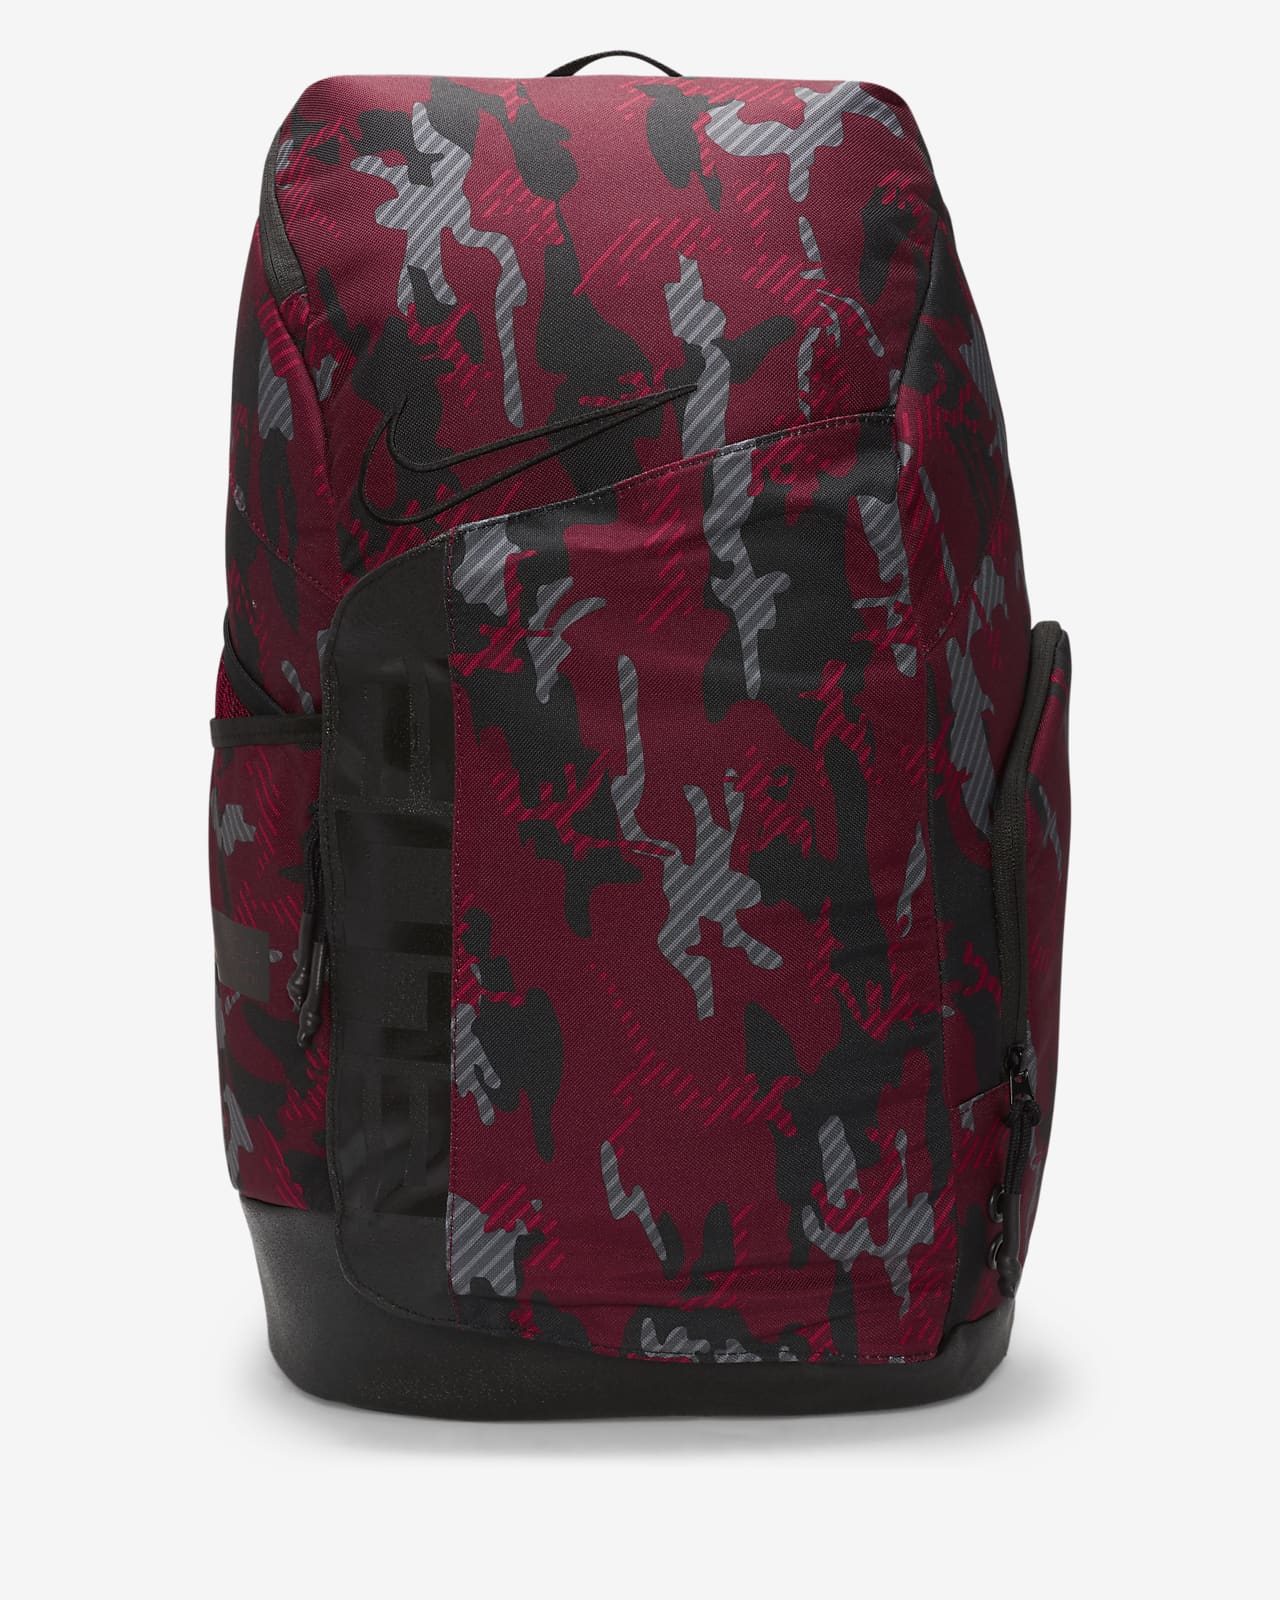 Nike Elite Pro Printed Basketball Backpack (32L)